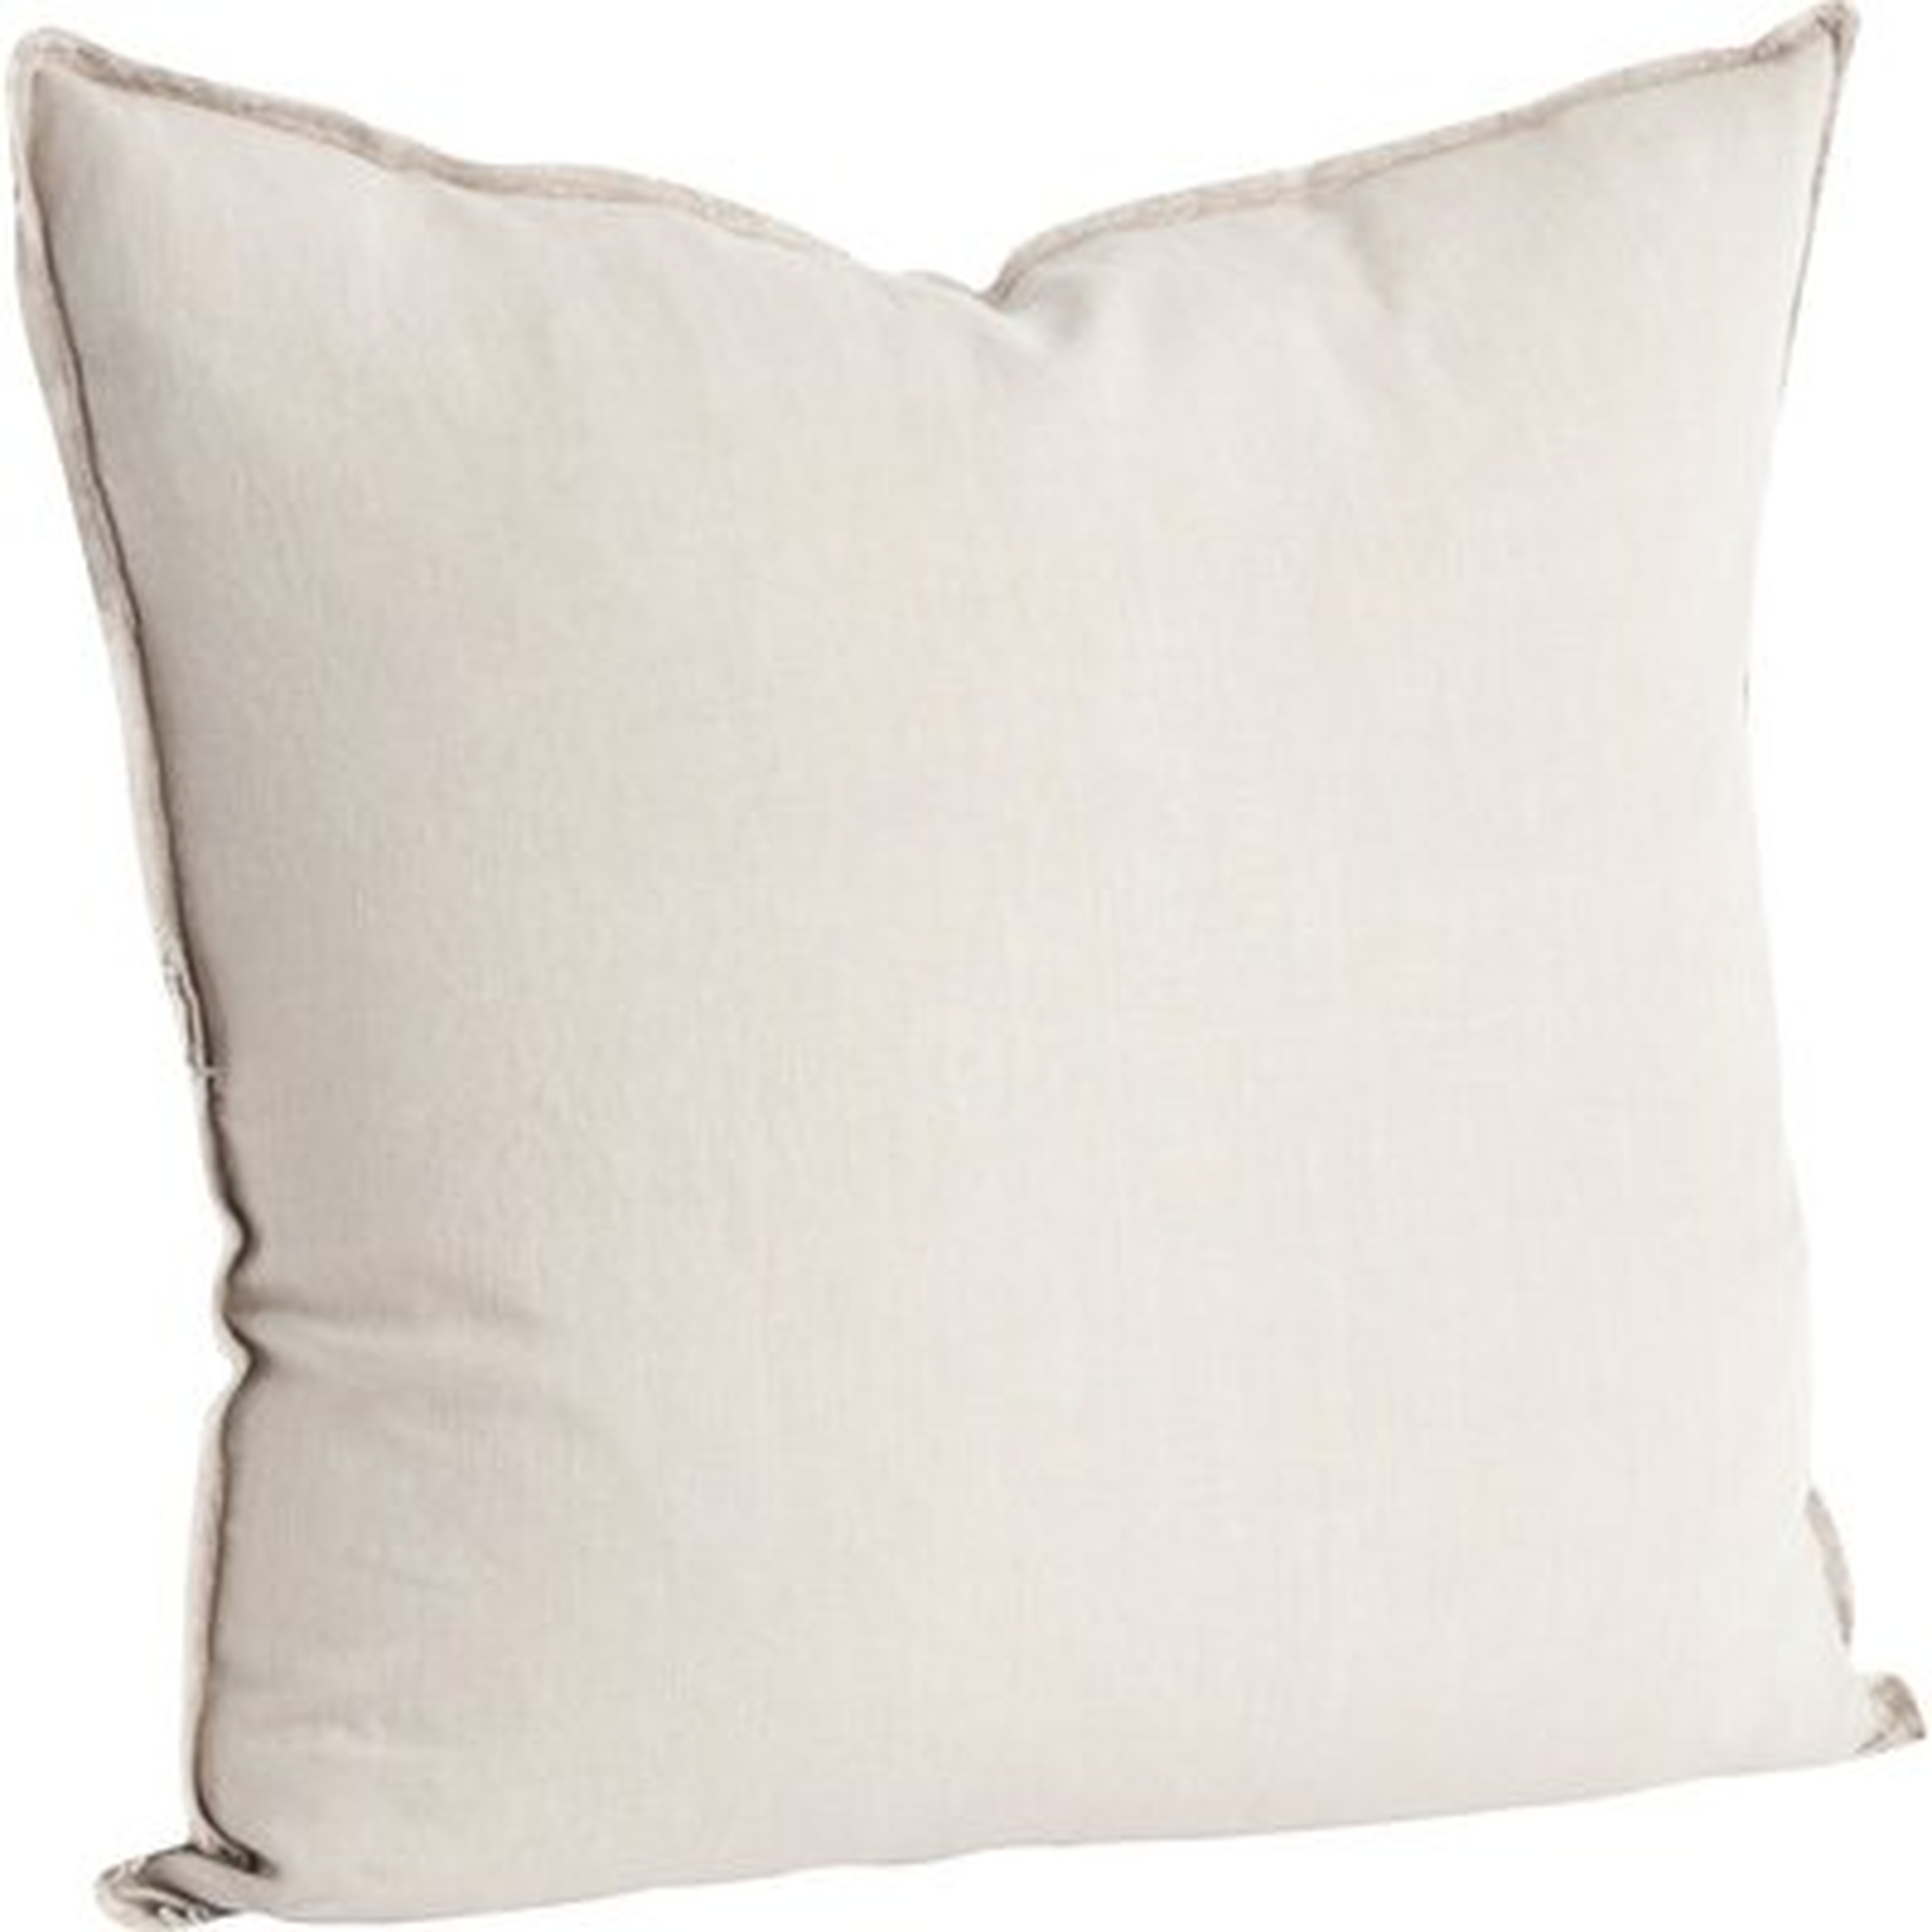 Centralia Linen Throw Pillow, Natural, 20" x 20" - Wayfair